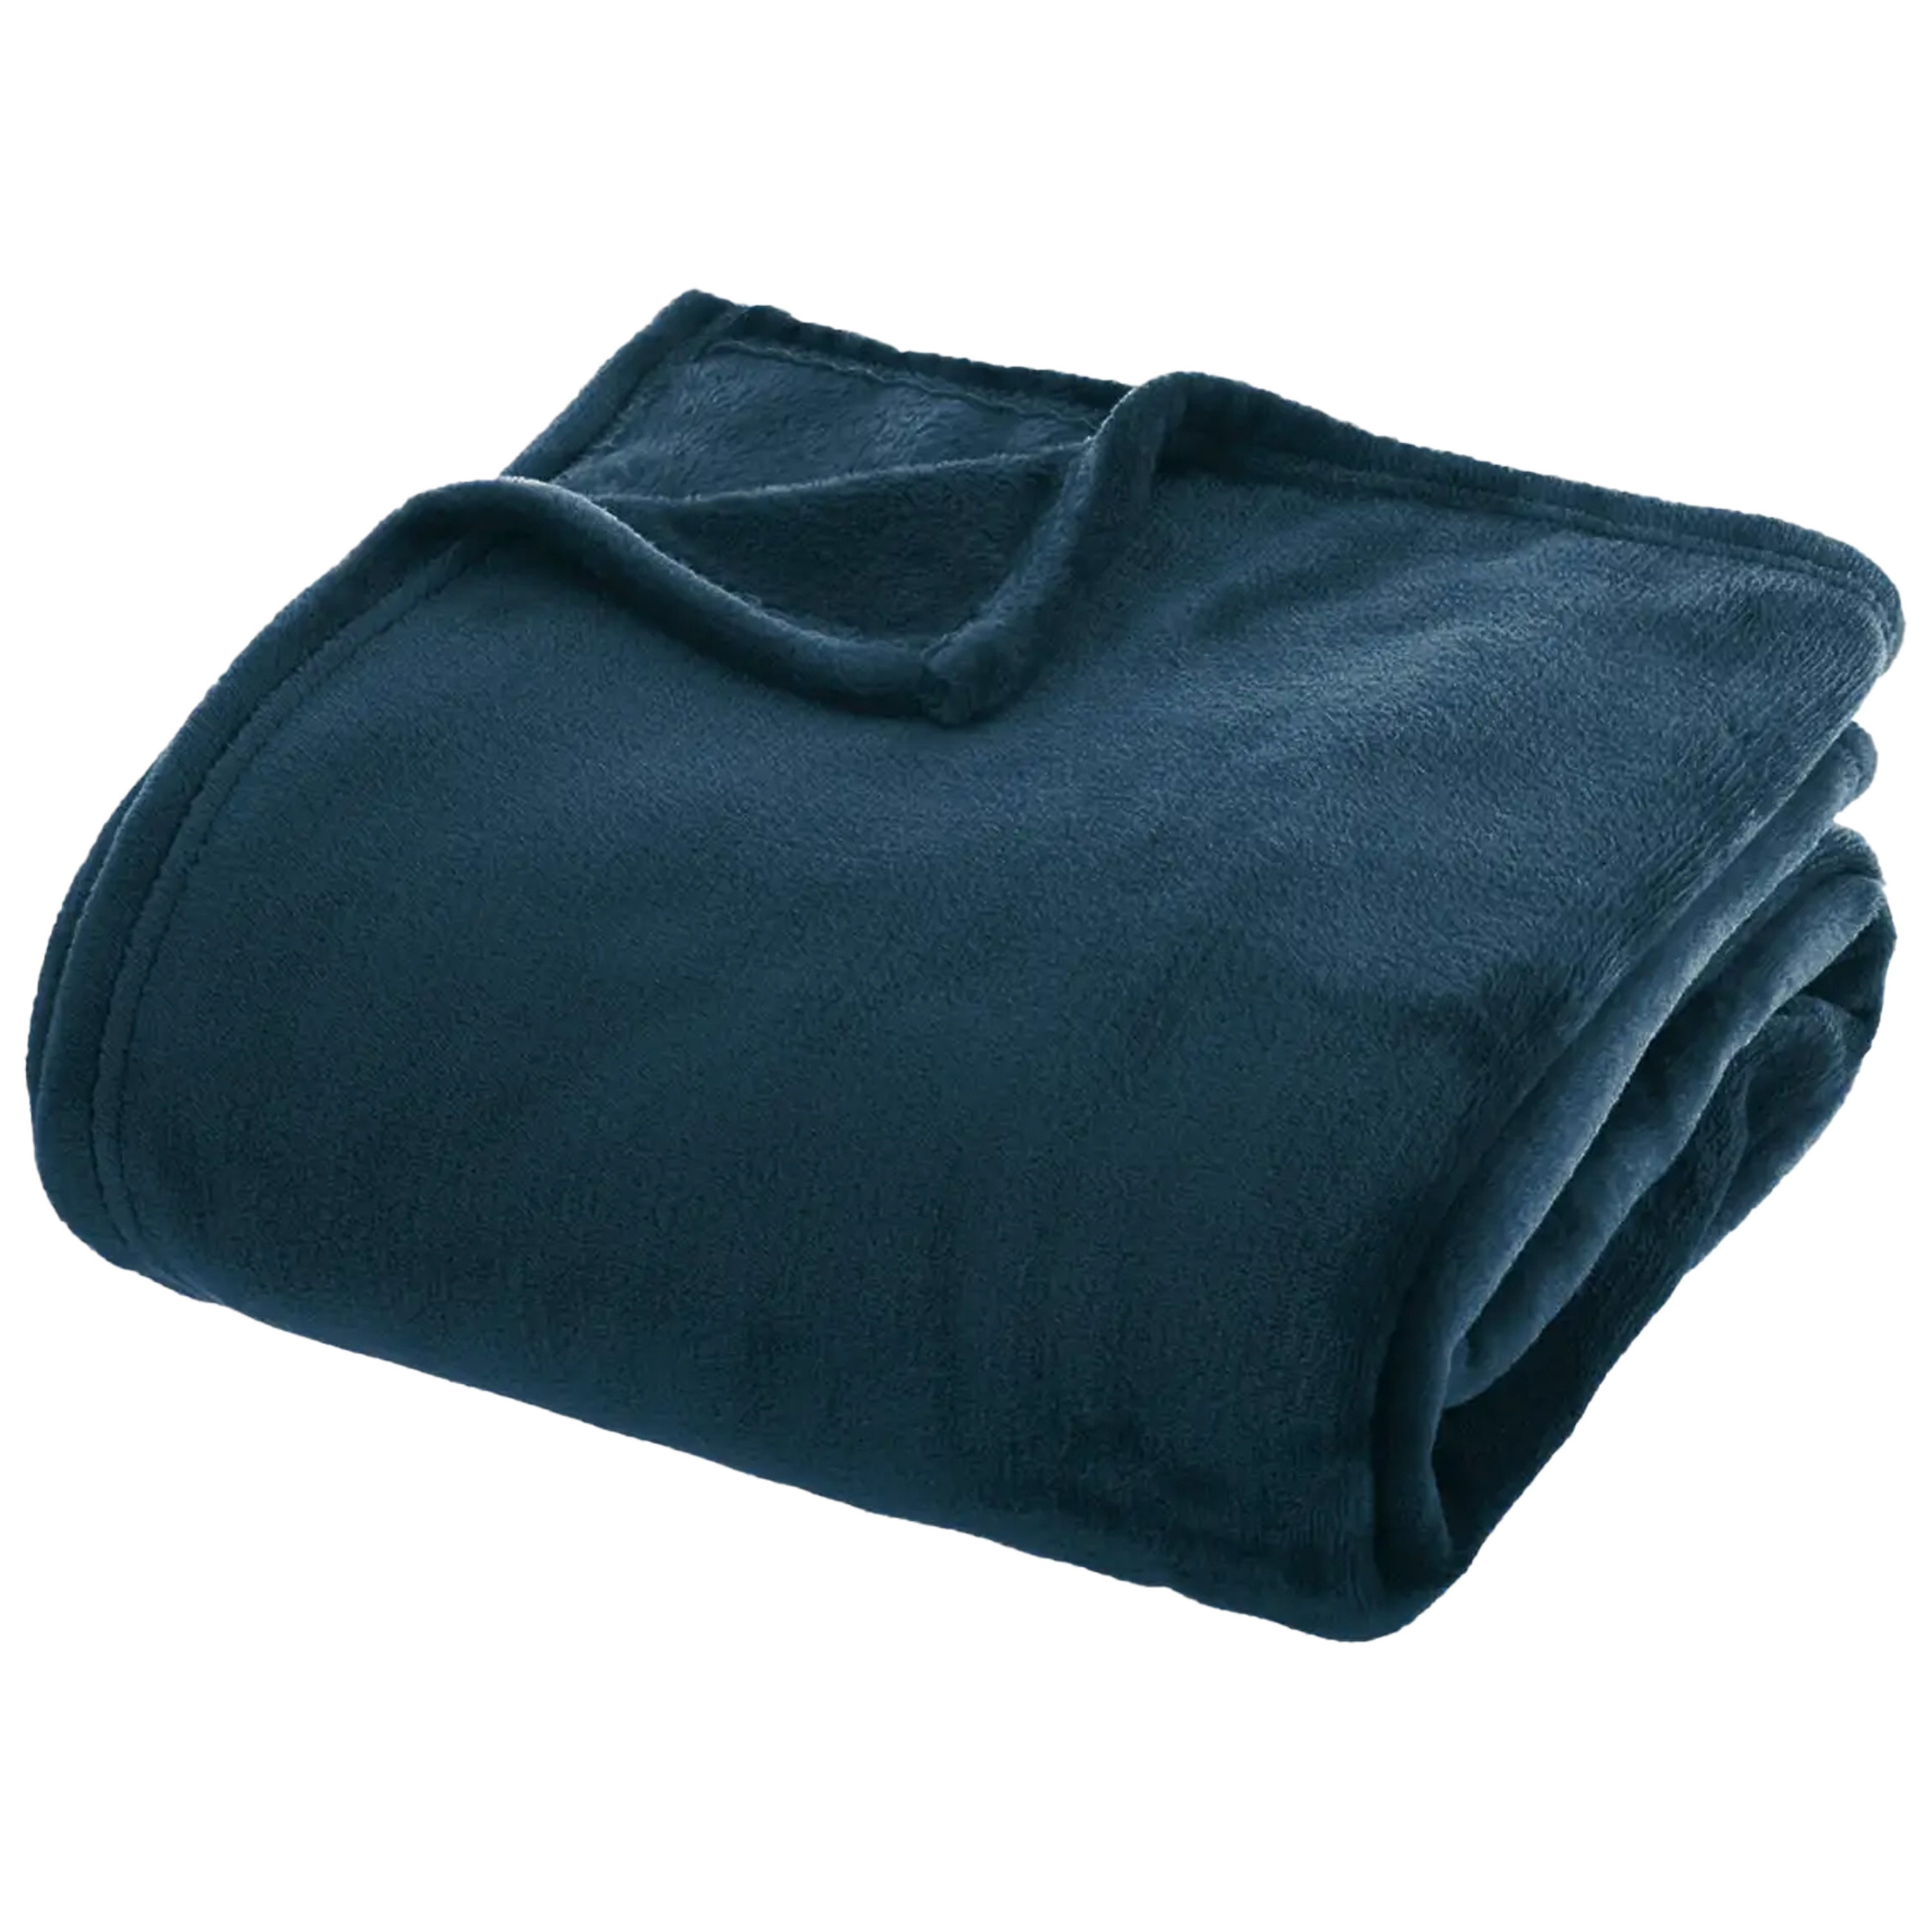 Fleece deken-fleeceplaid donkerblauw 180 x 230 cm polyester bankdeken